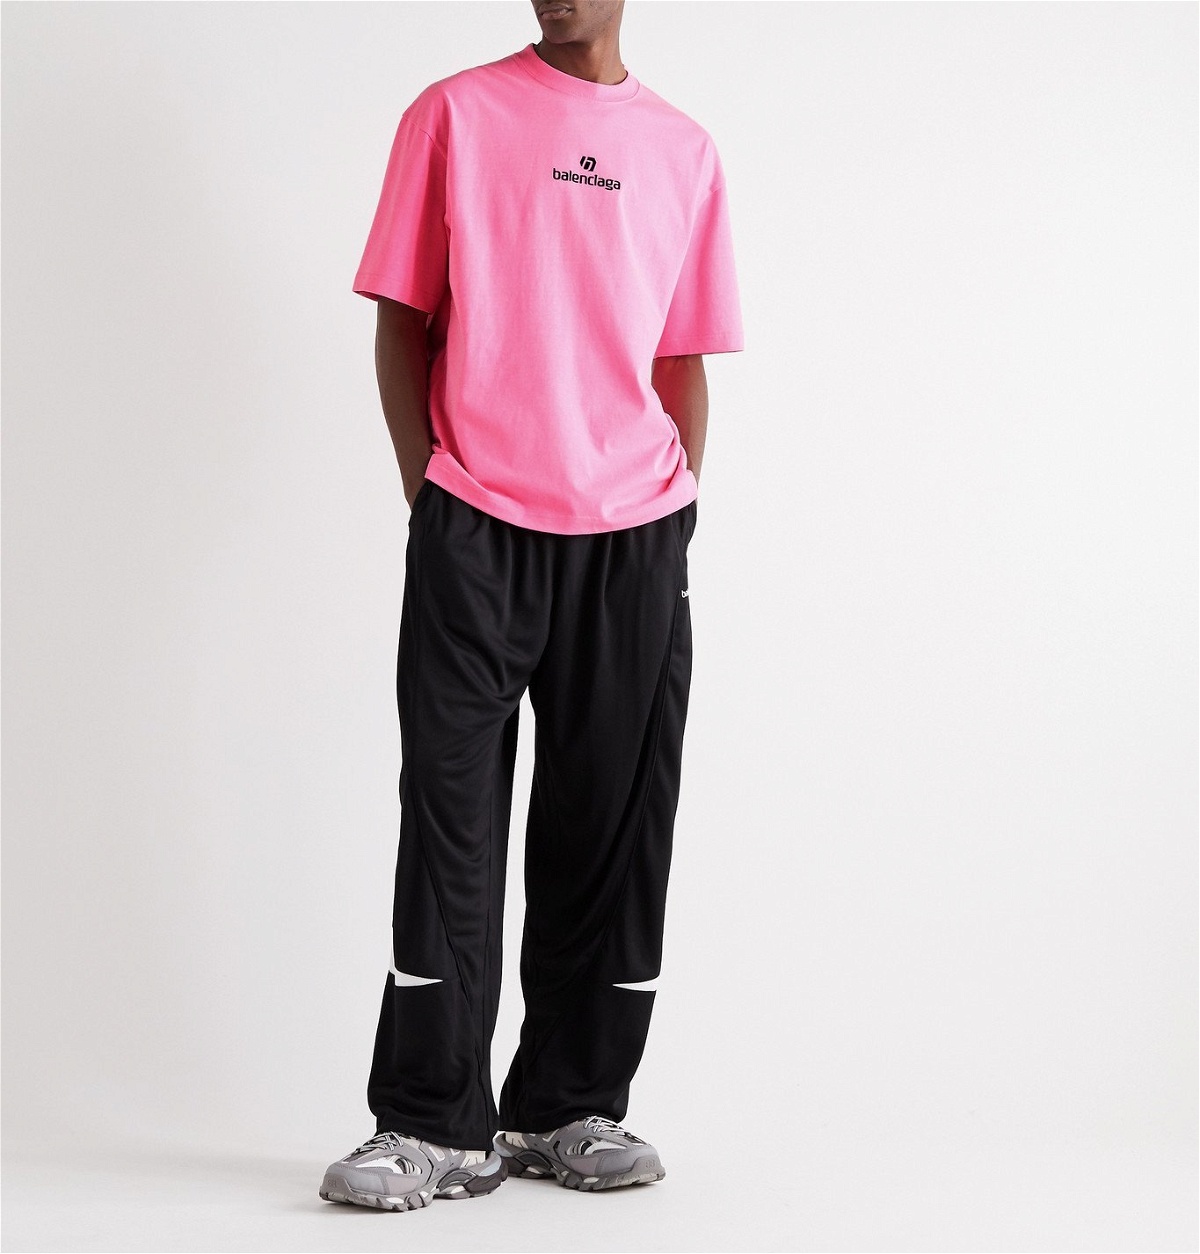 Bb Paris Strass Tshirt Medium Fit in Pink  Balenciaga US